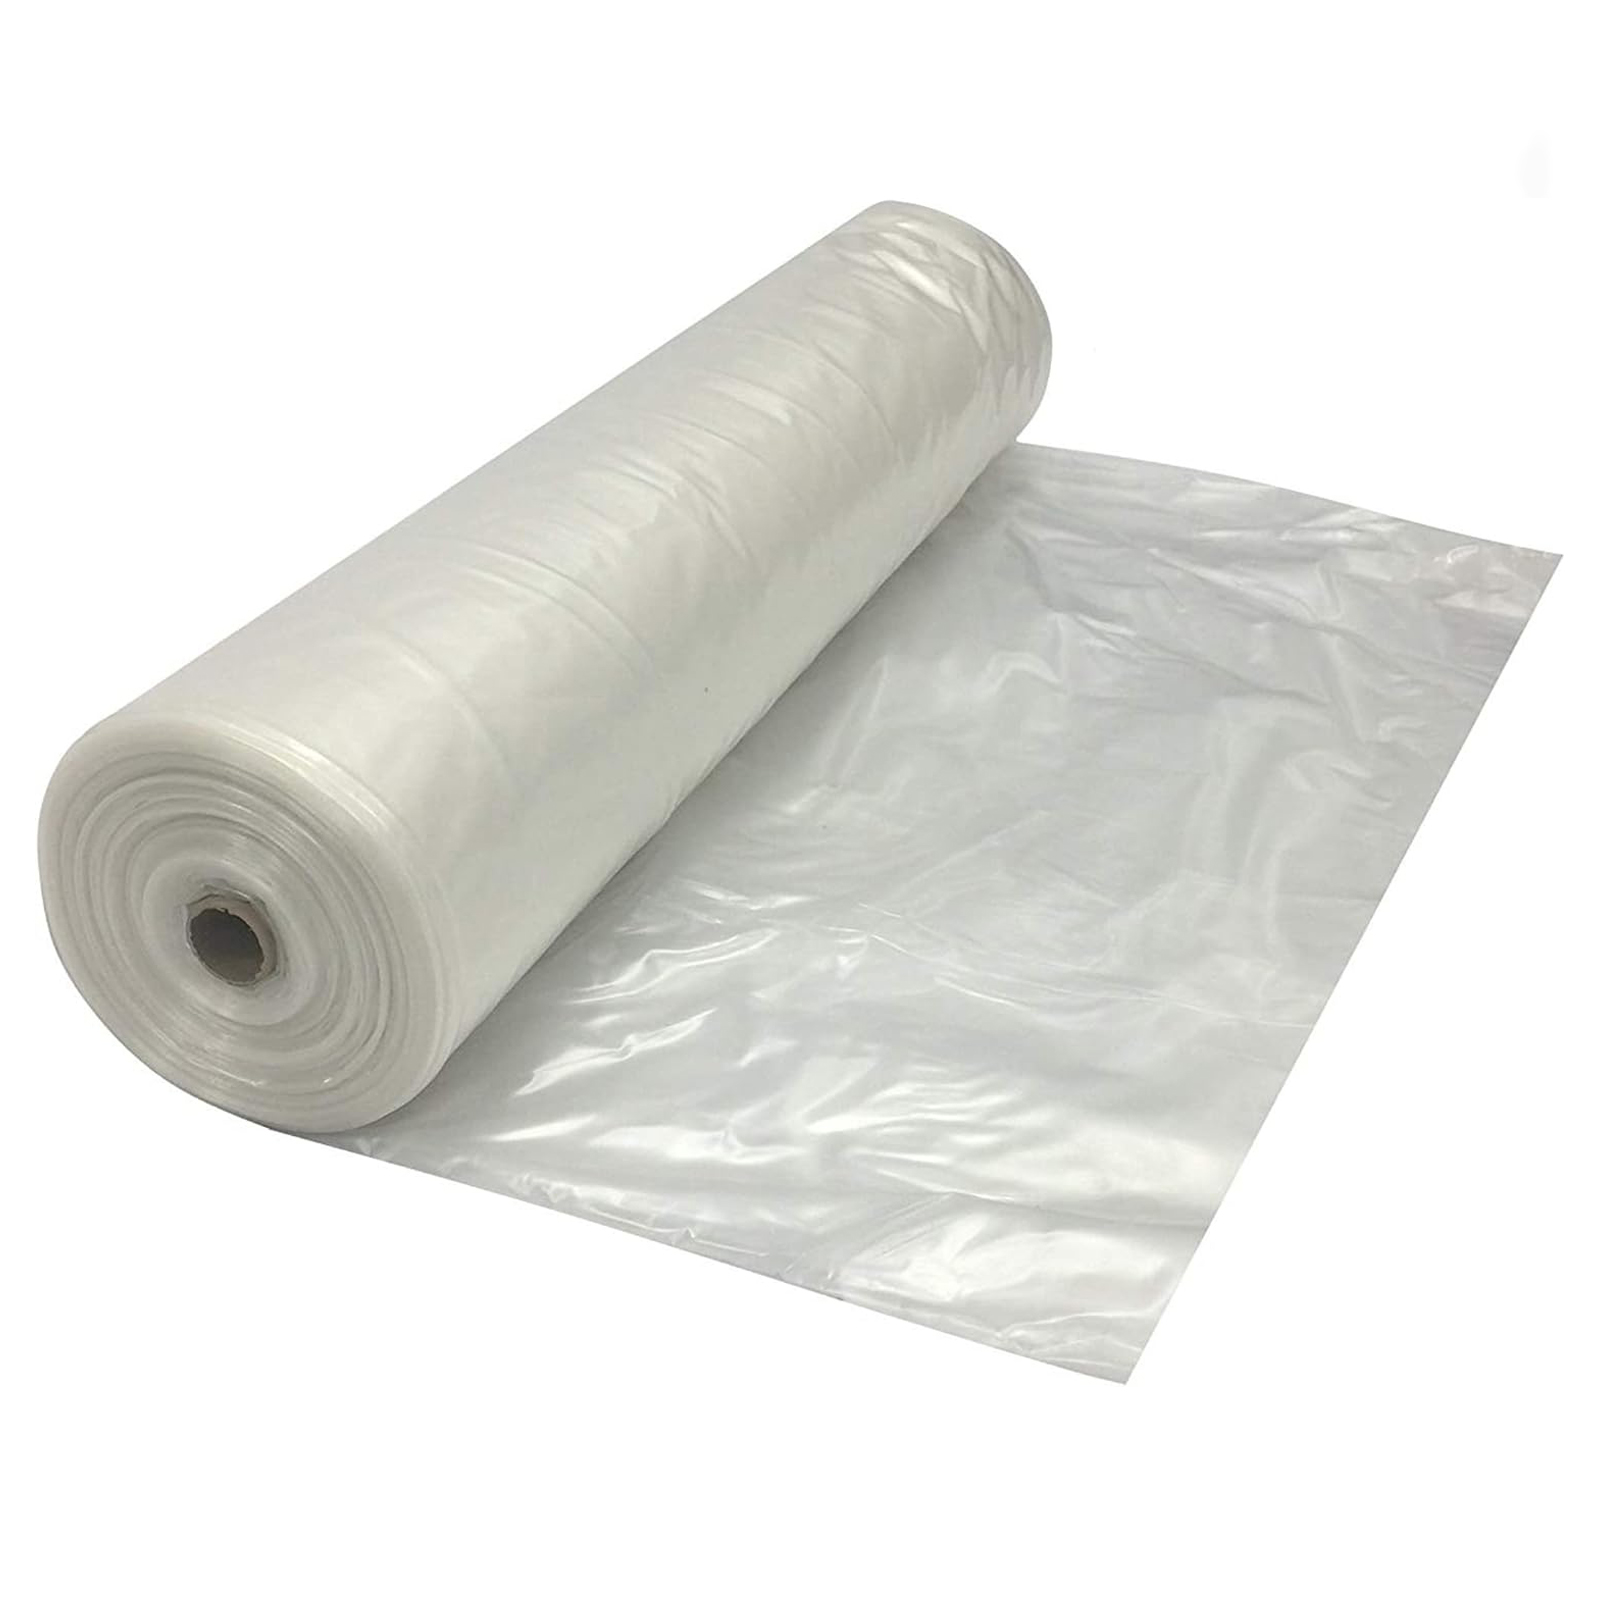 AlorAir® 3 mil Clear Plastic Sheeting